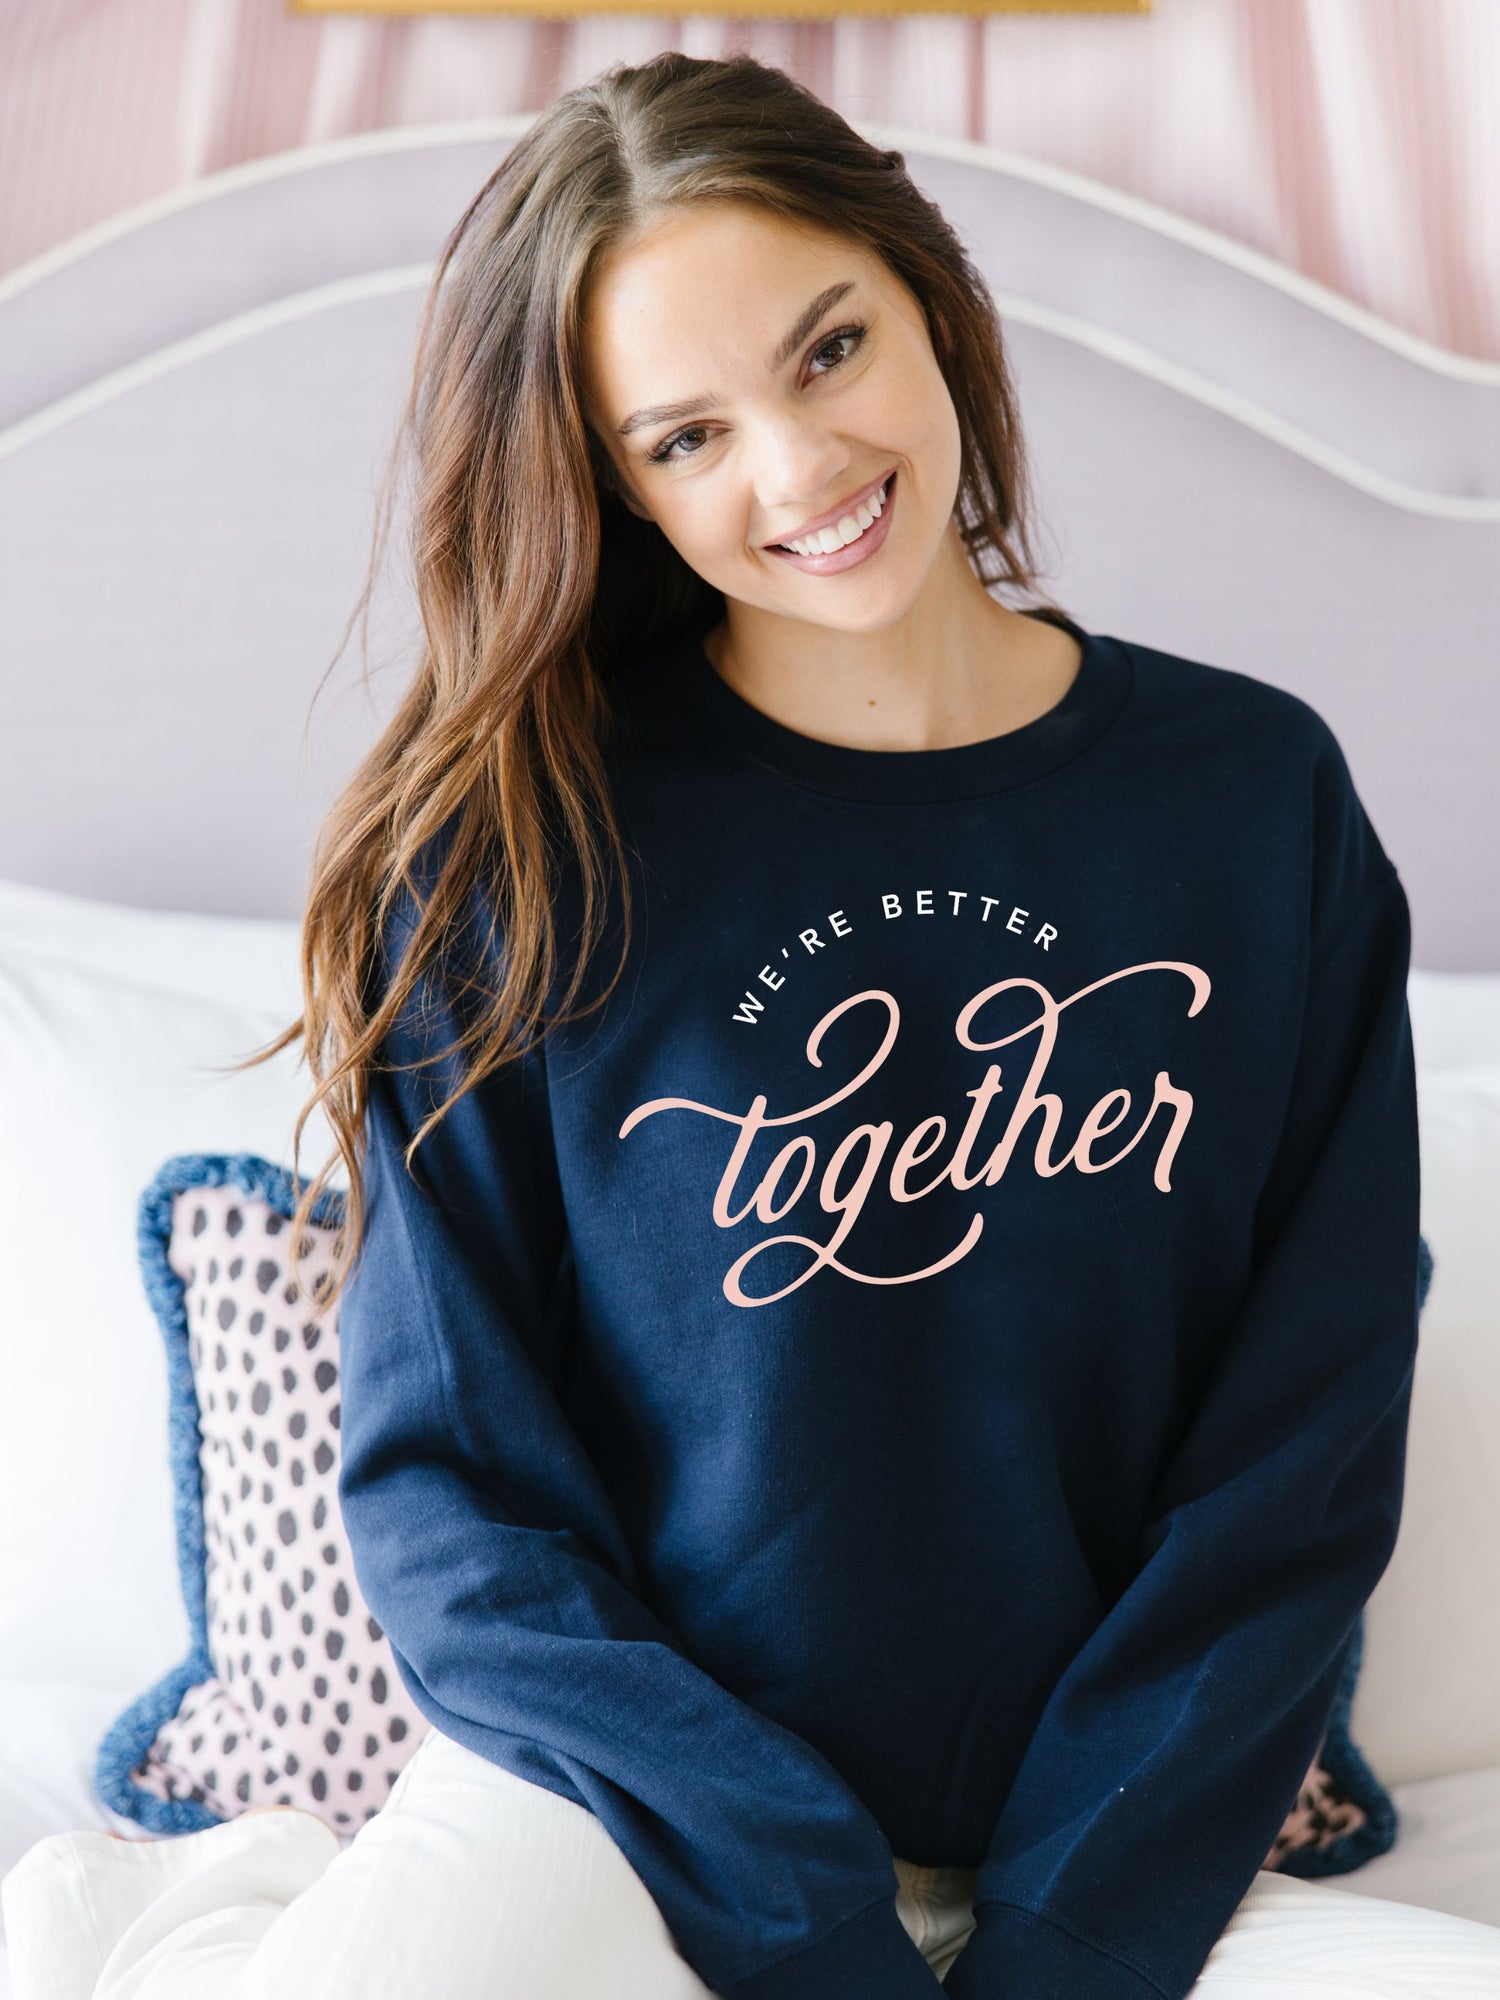 Better Together Sweatshirt for best friend girls trips